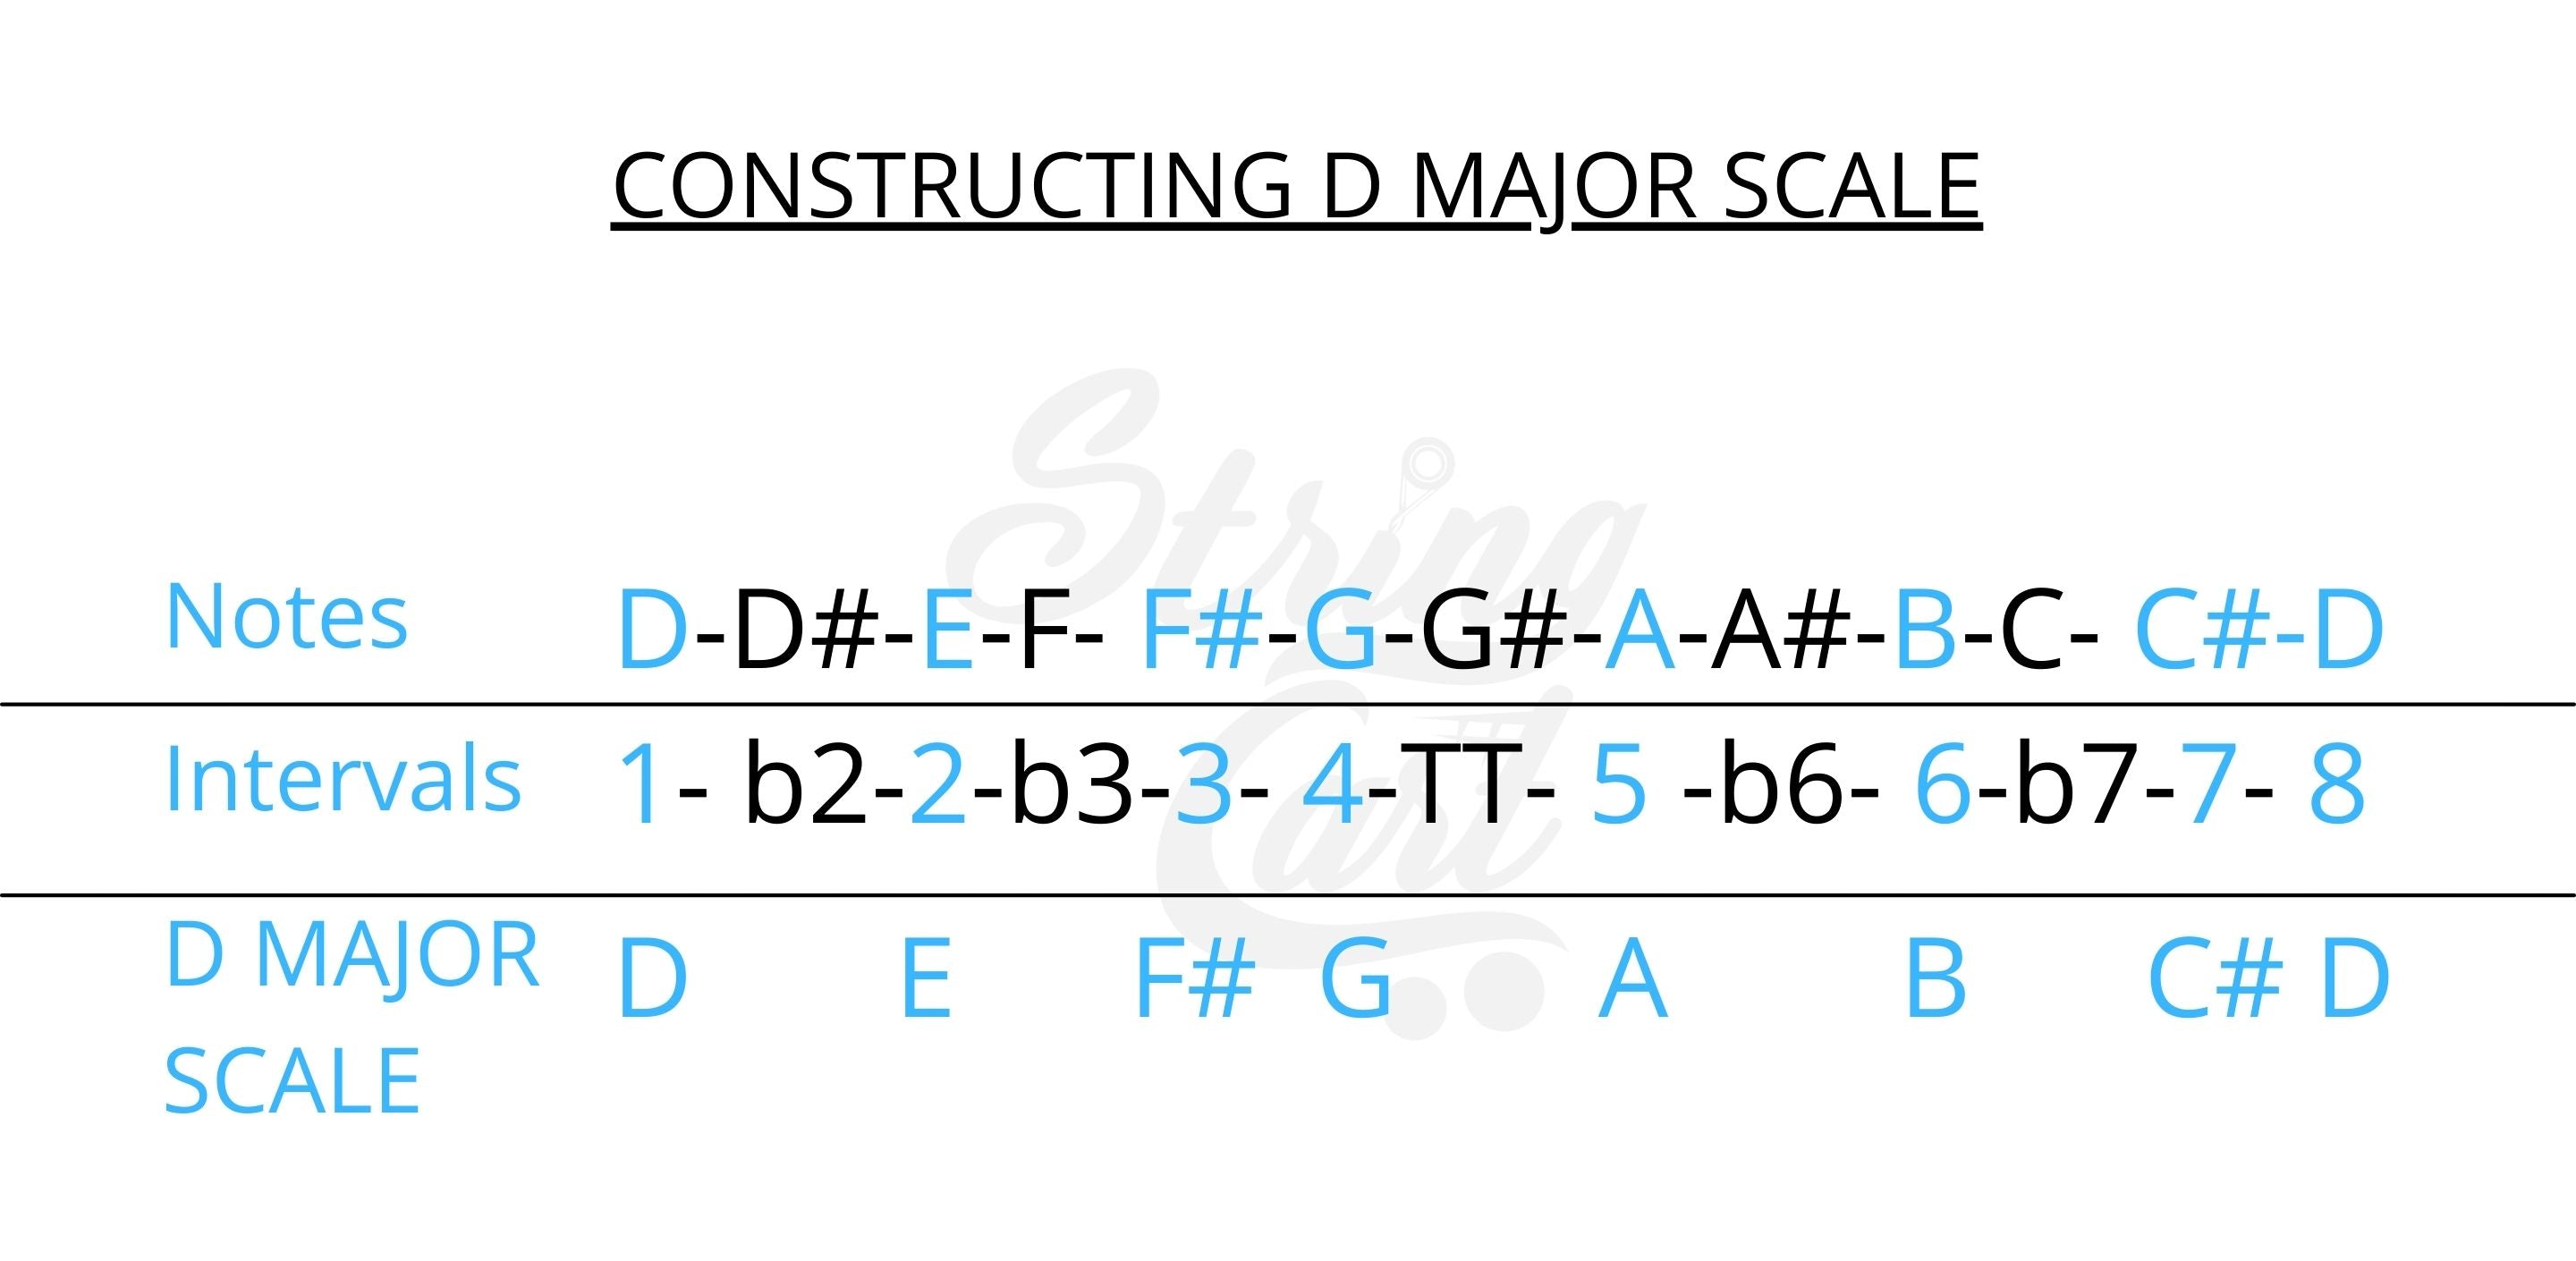 D Major Scale Construction Using Major Scale Formula